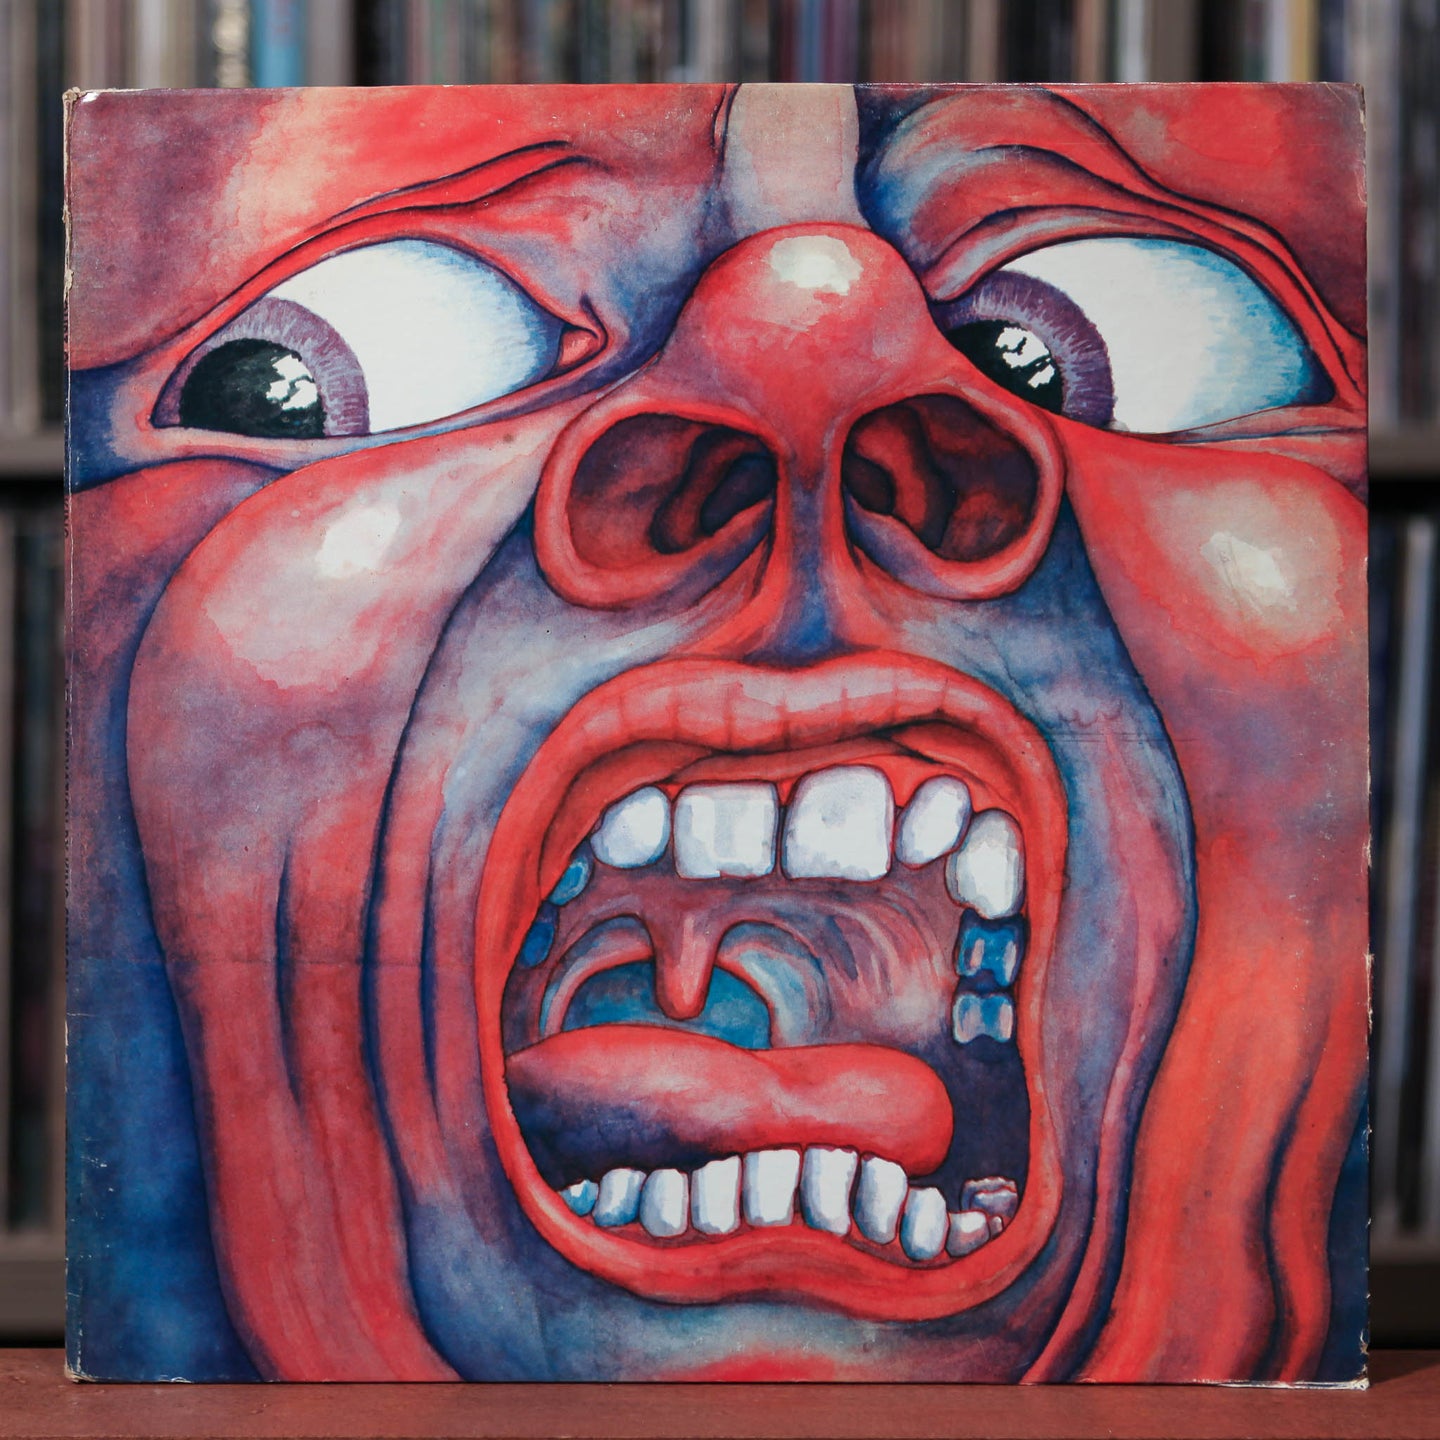 King Crimson - In The Court of the Crimson King - Canadian Import - 1972 Atlantic, VG+/VG+